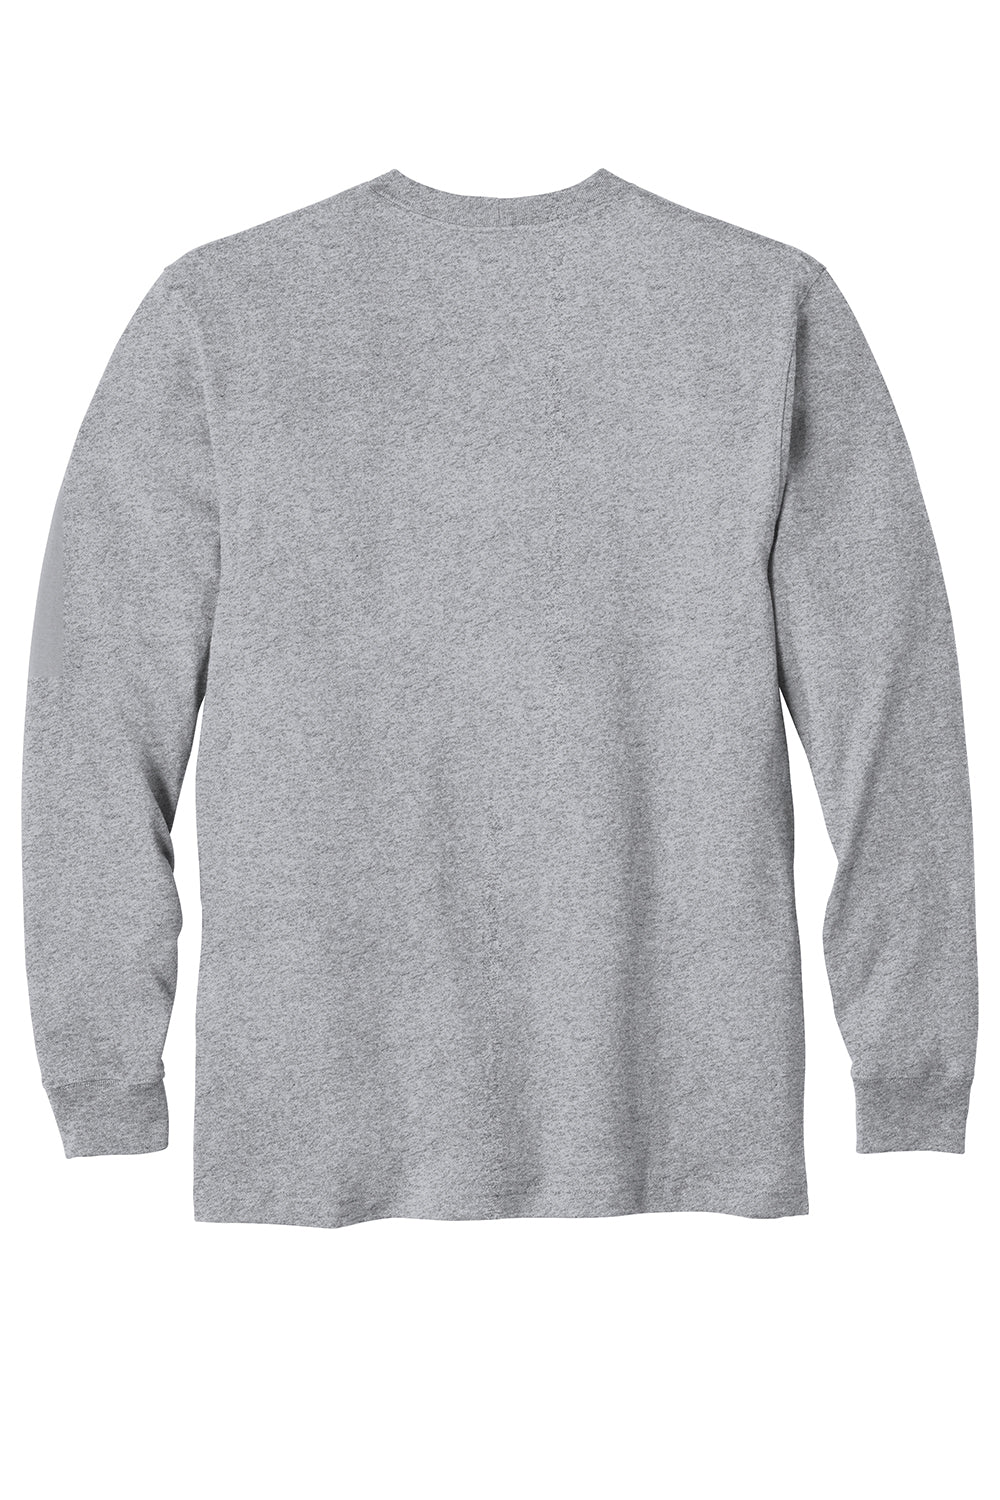 Carhartt CTK126 Mens Workwear Long Sleeve Crewneck T-Shirt w/ Pocket Heather Grey Flat Back